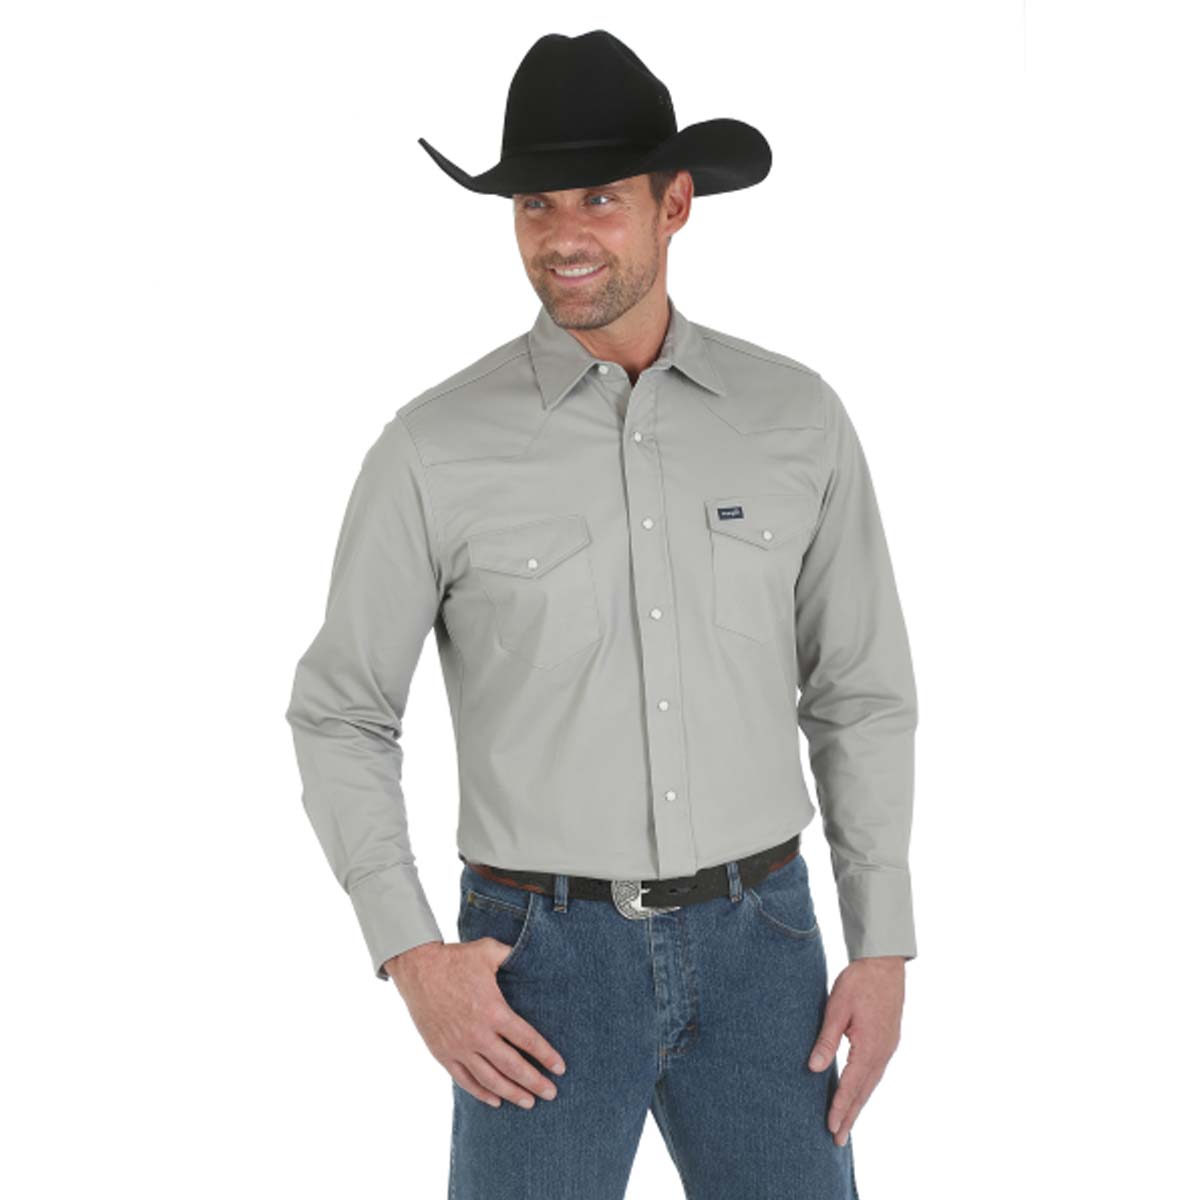 Men's Wrangler® Premium Performance Advanced Comfort Cowboy-Cut Long-Sleeved Shirt - Cement